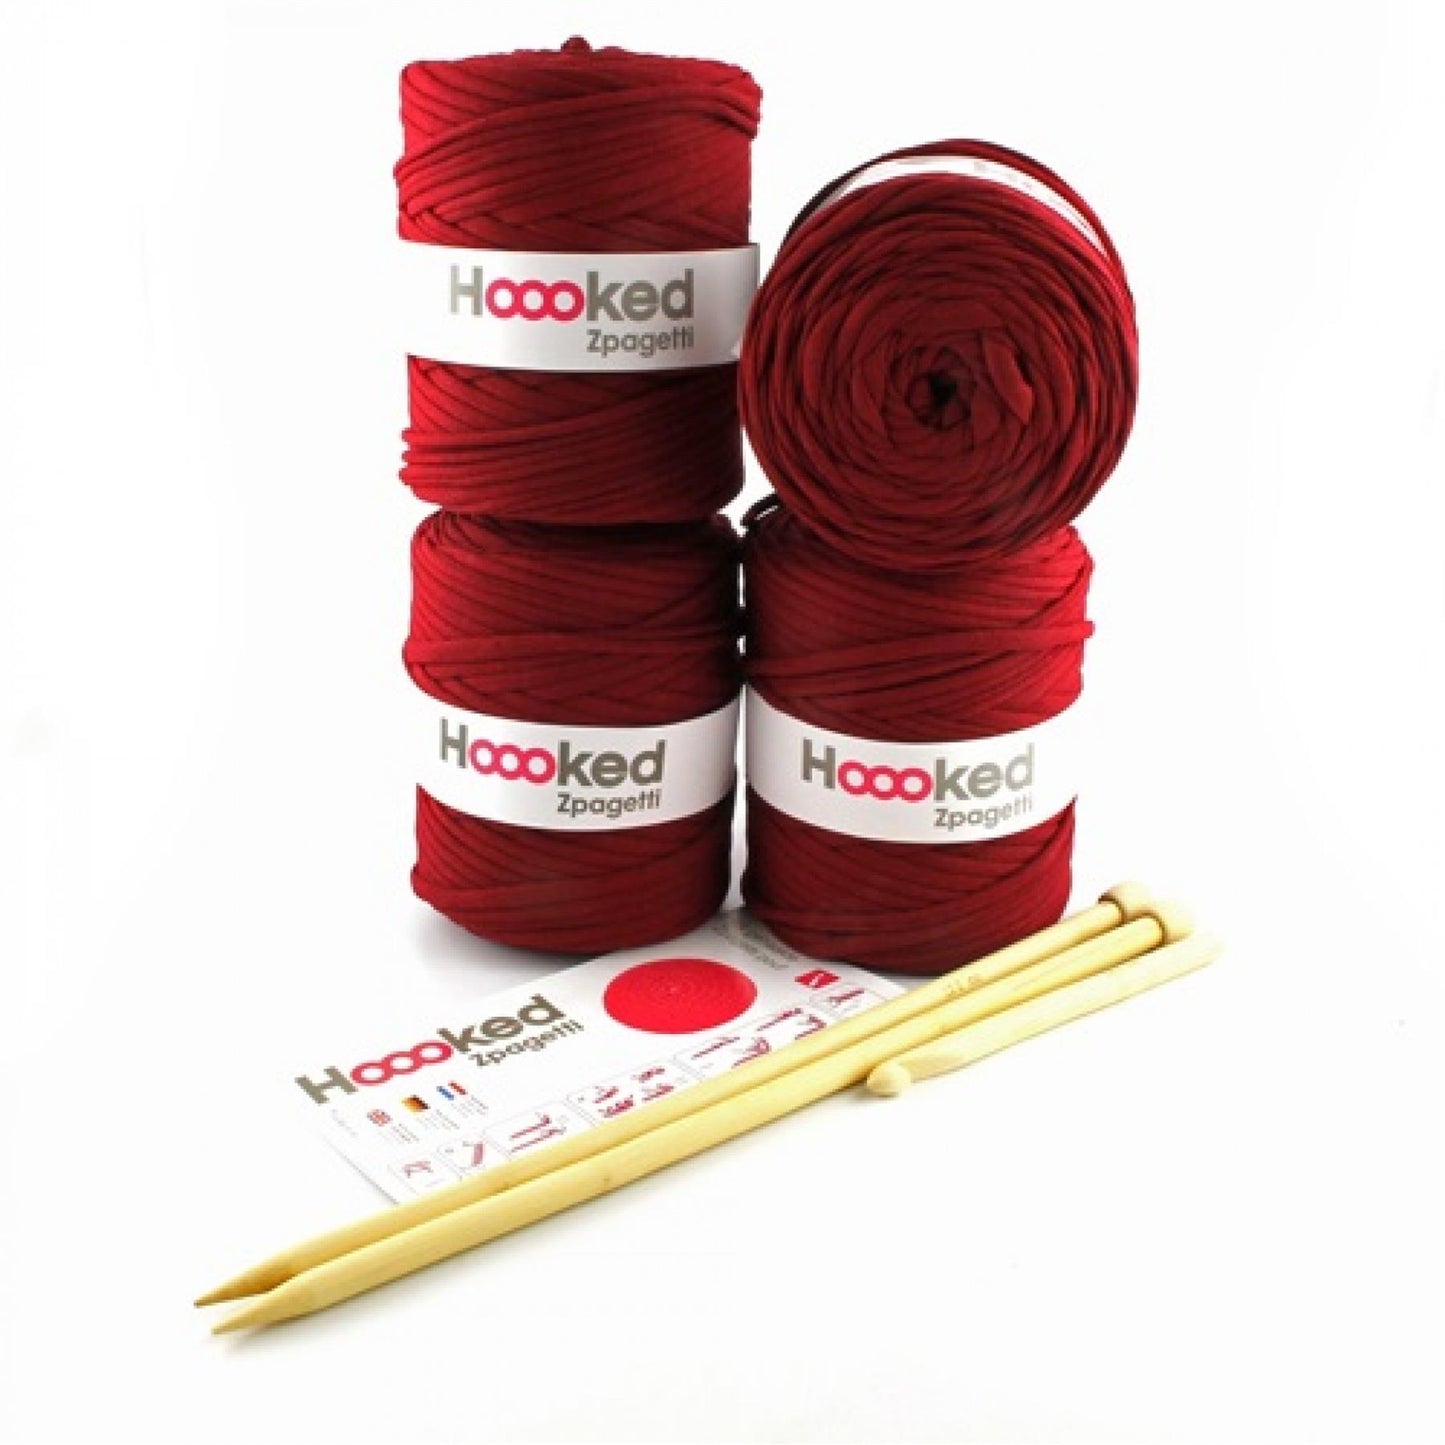 Hoooked Zpagetti Marsala Bordeaux Cotton Pouffe Knit and Crochet Kit